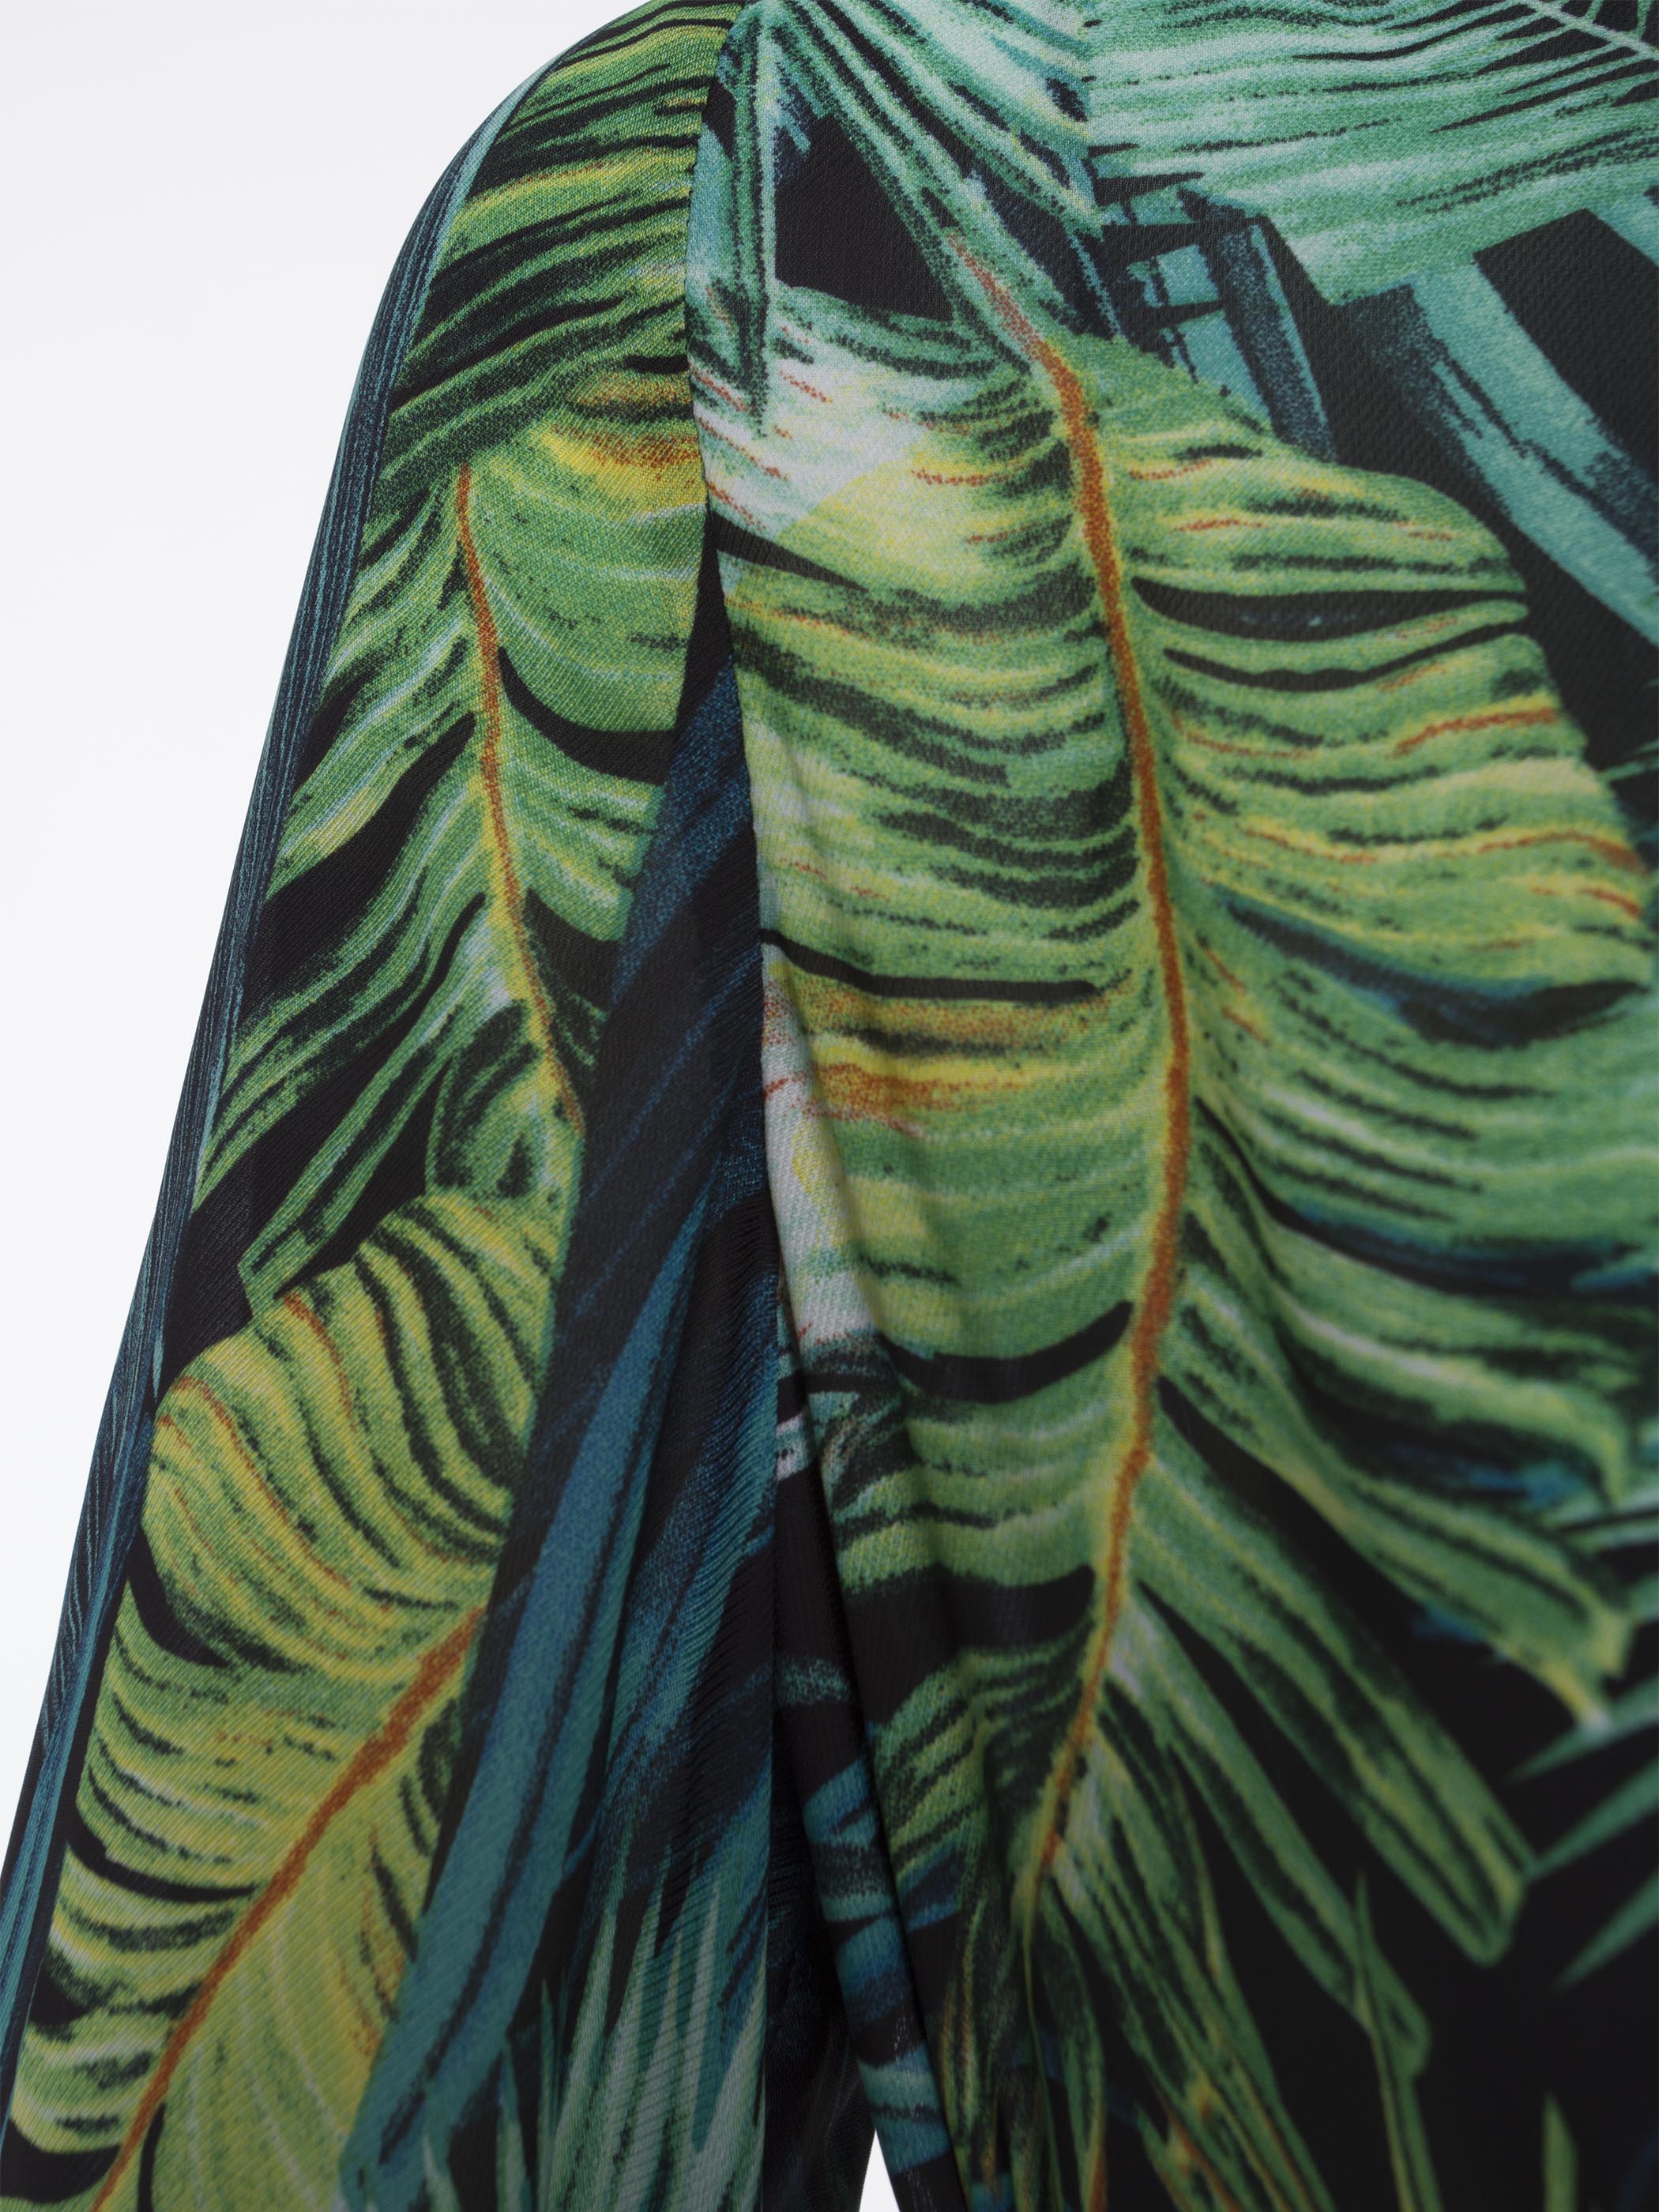 V-Neck Lantern Sleeve Plant Print Vacation Women's Maxi Dress